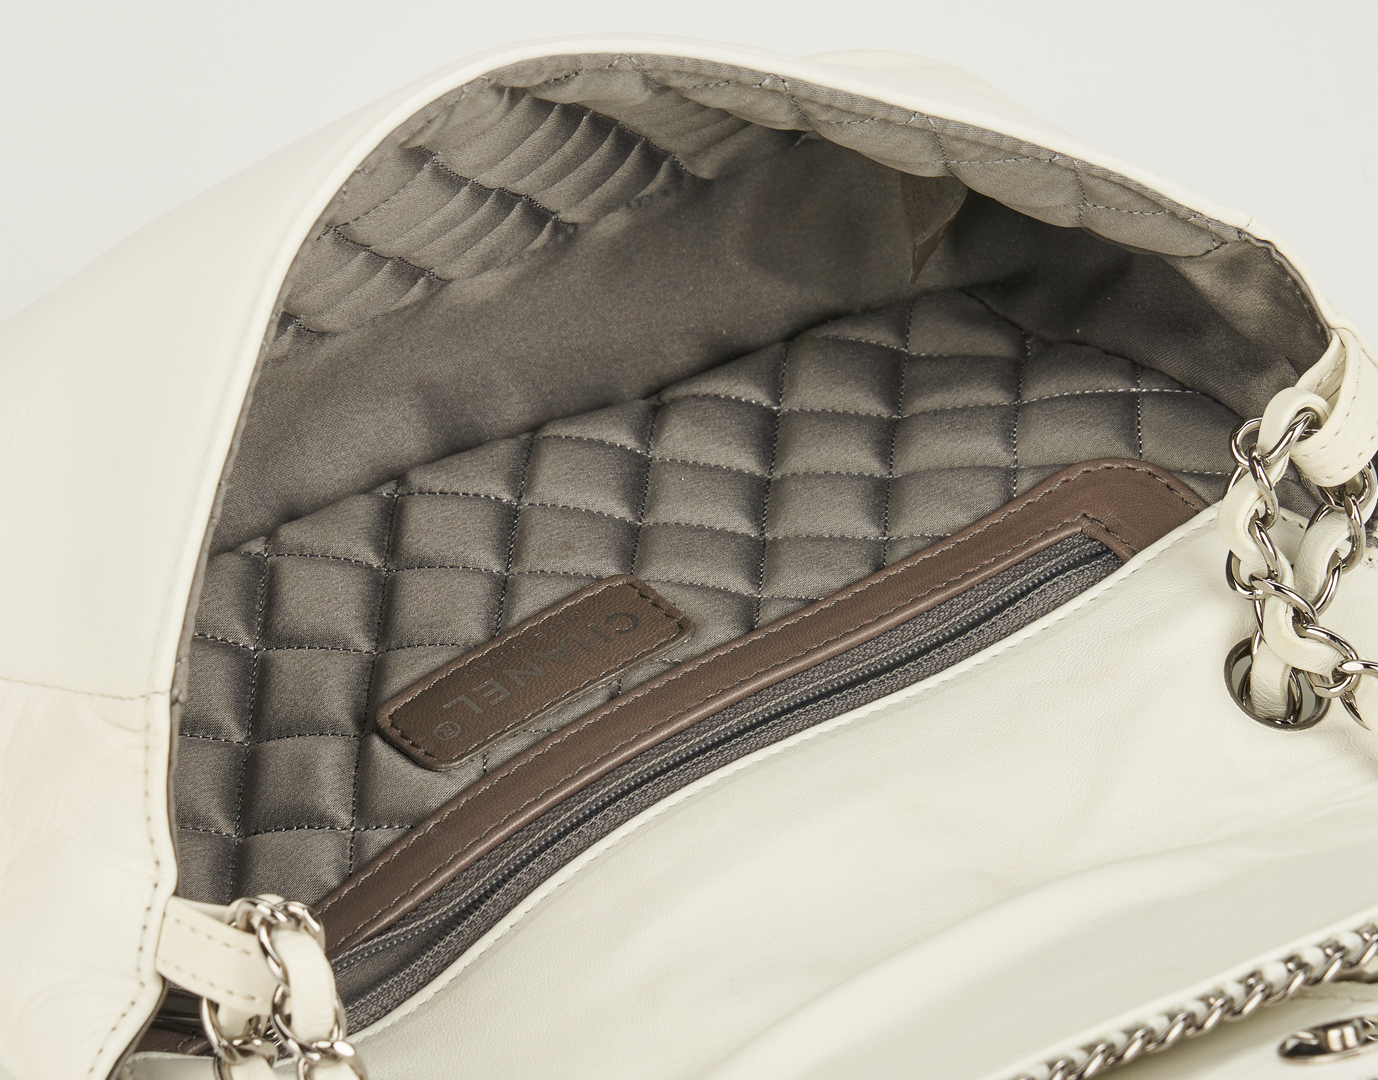 Lot 709: Chanel Madison Single Flap White Bag, Medium